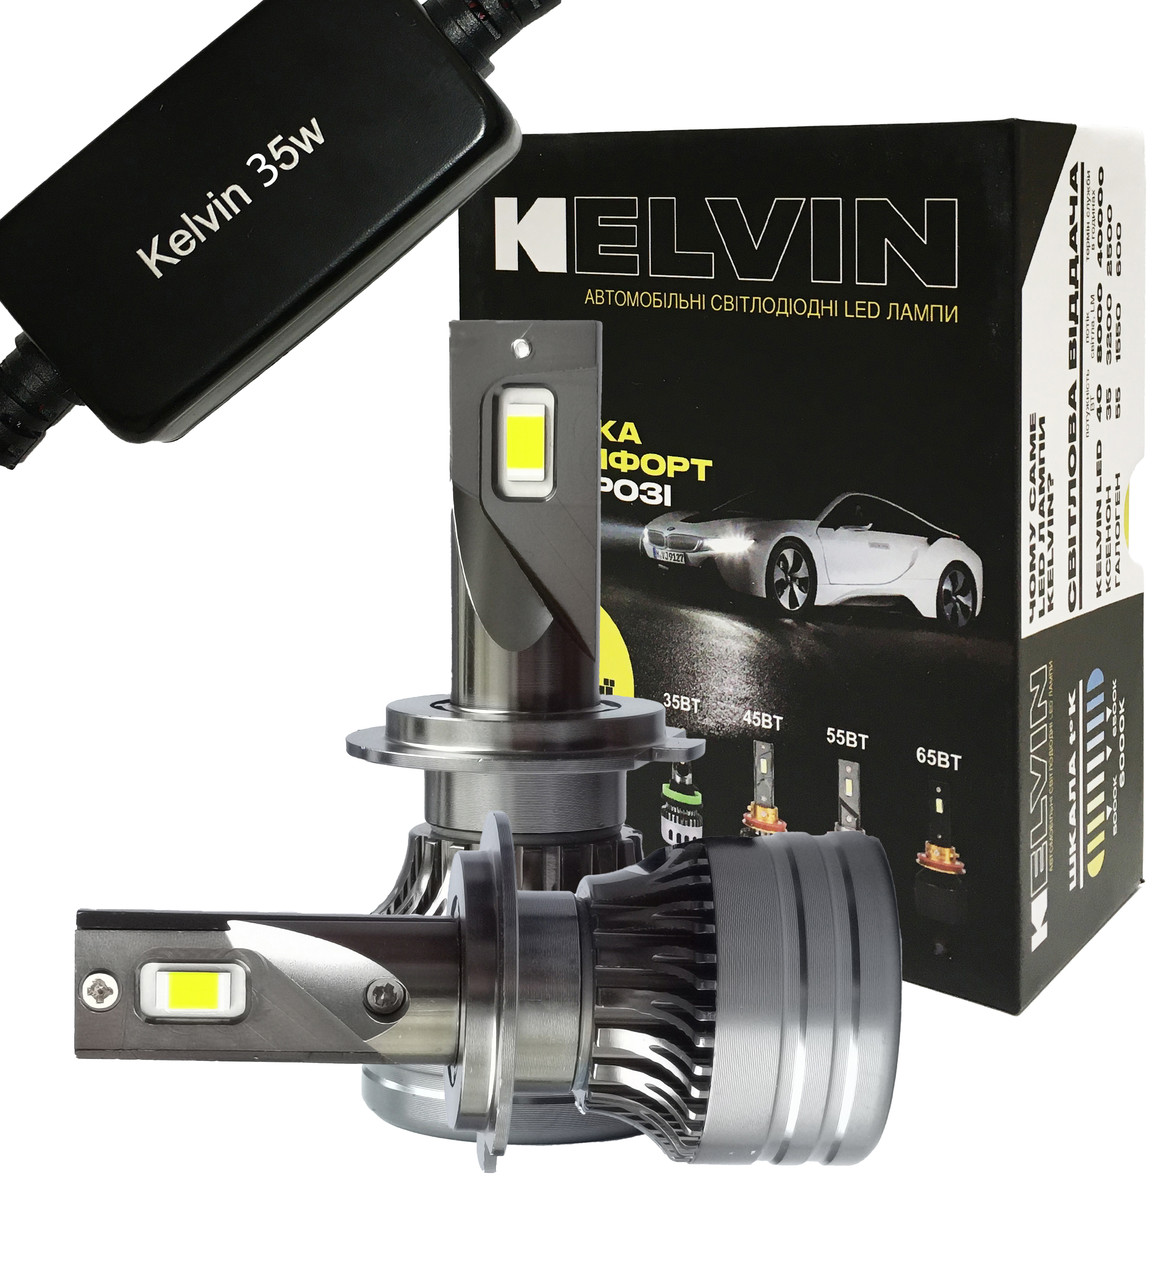 H7 LED лампи Kelvin 35W Kseries автолампи 8000Lm 6000K